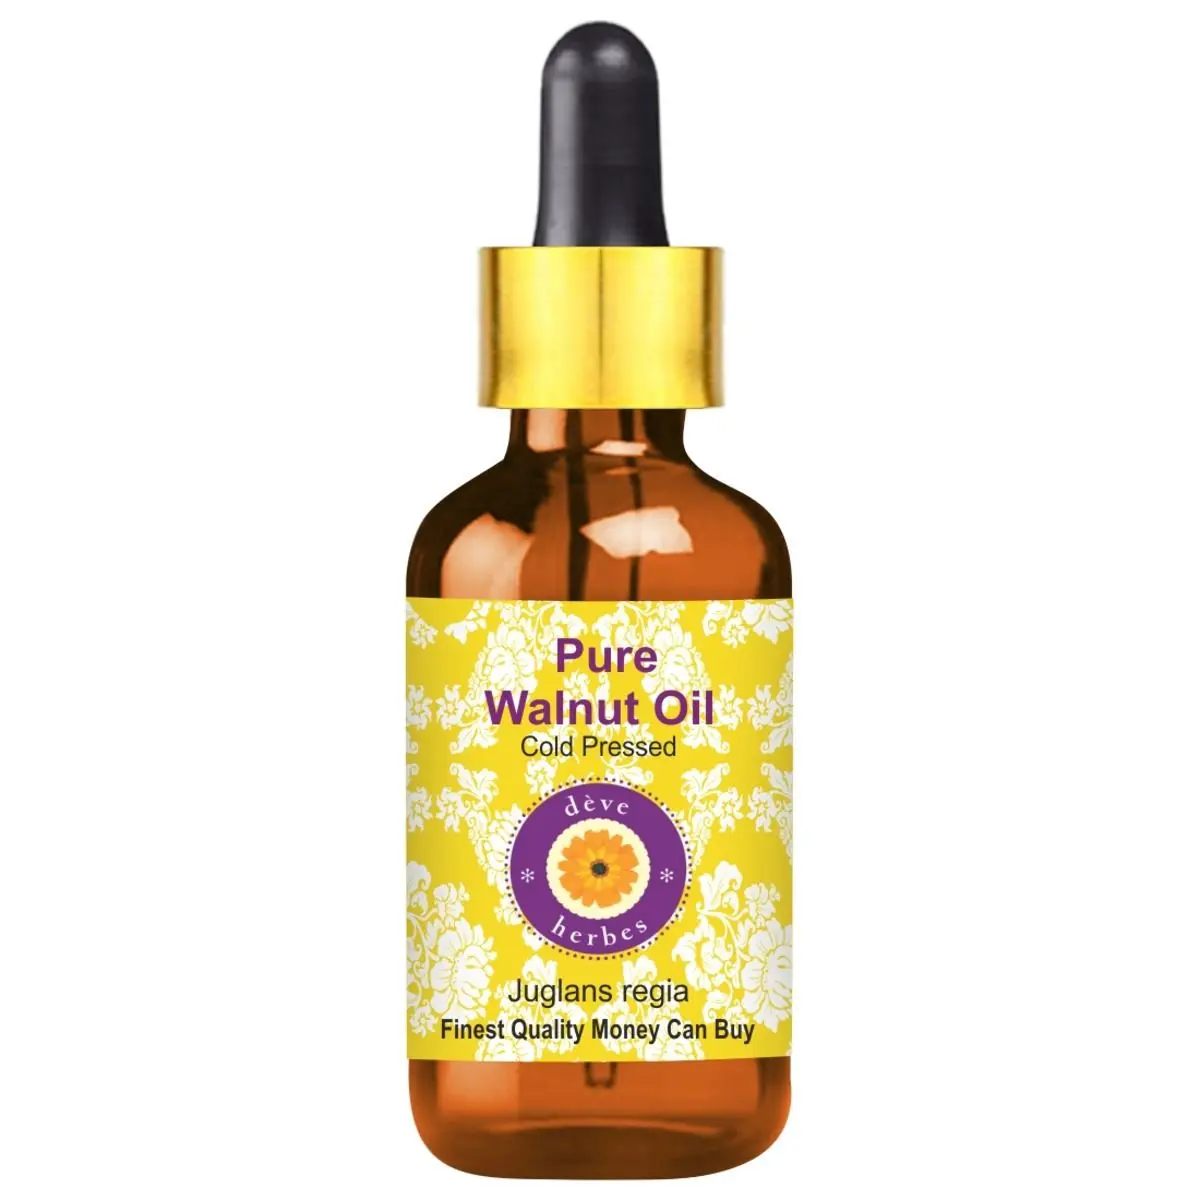 Deve Herbes Pure Walnut Oil (Juglans regia) with Glass Dropper Natural Therapeutic Grade Cold Pressed 15ml